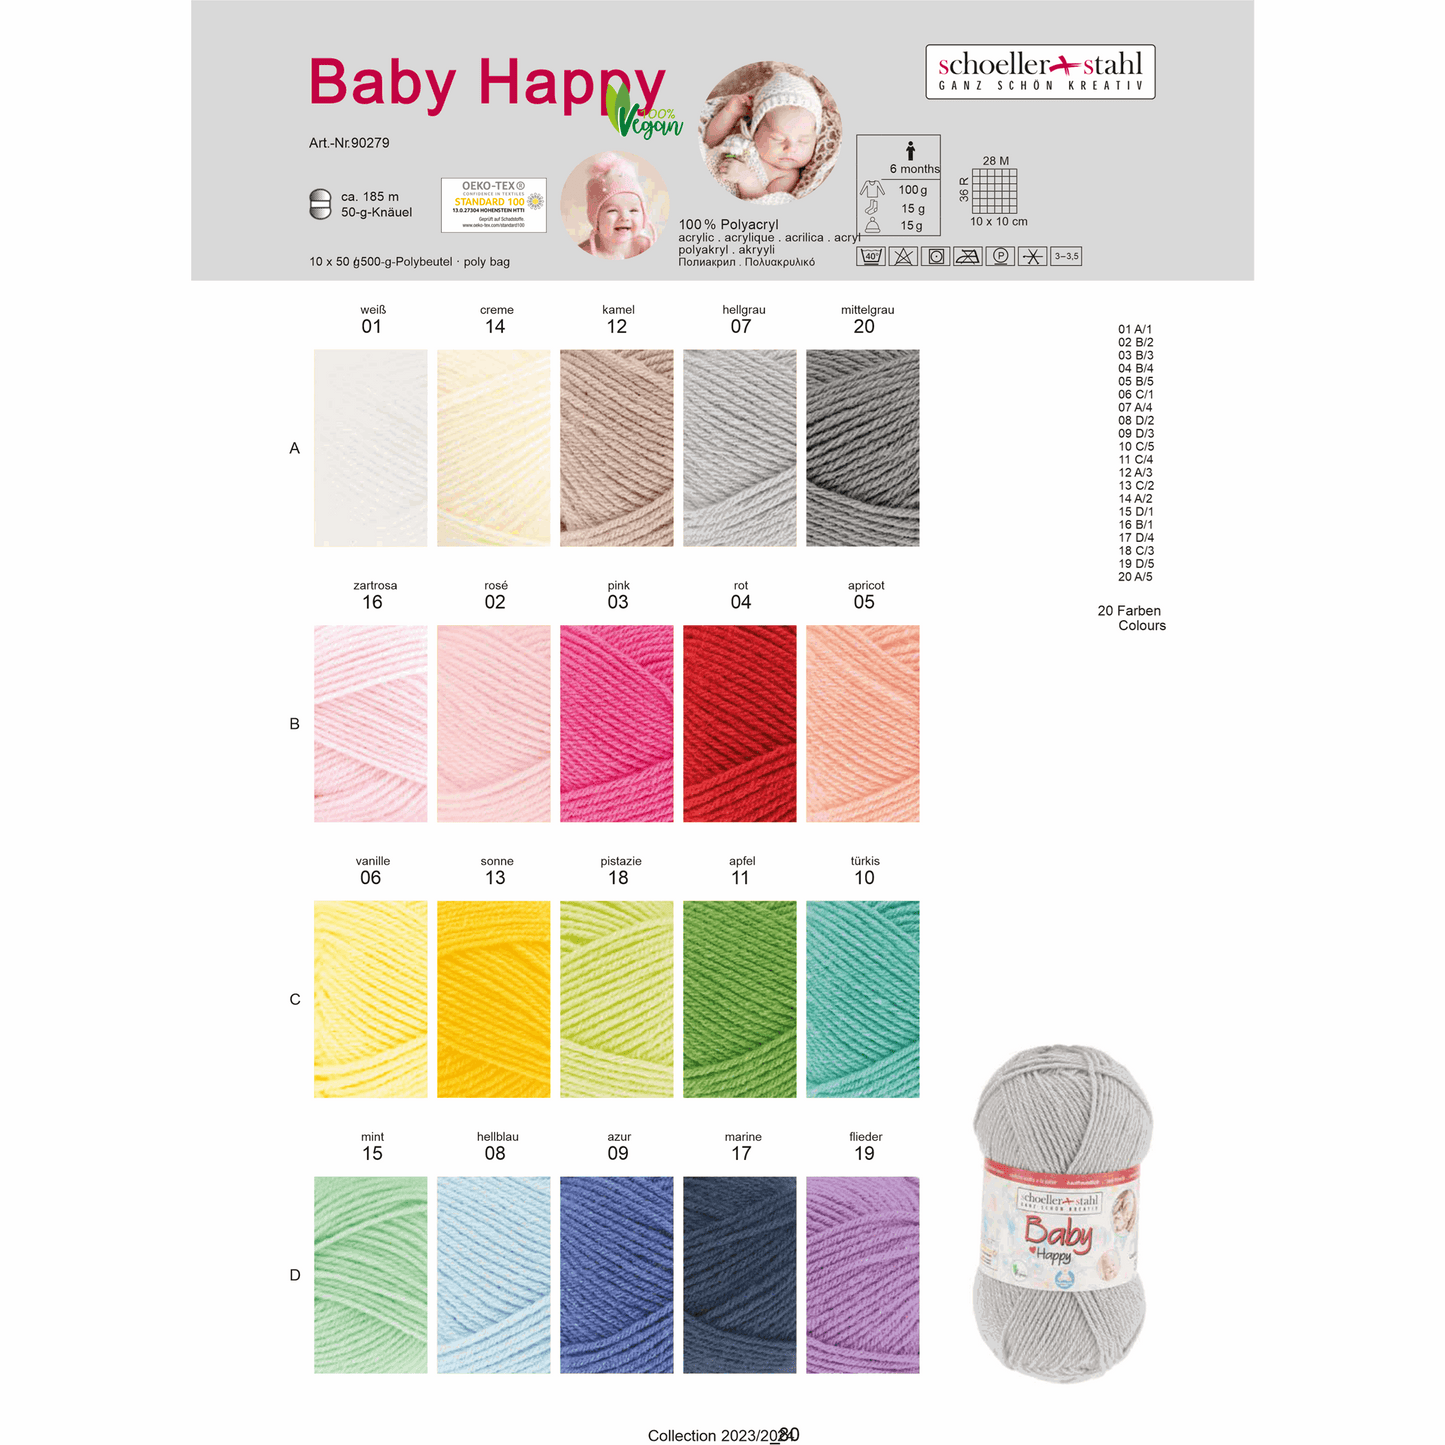 Baby happy 50g, 90279, color 2, pink